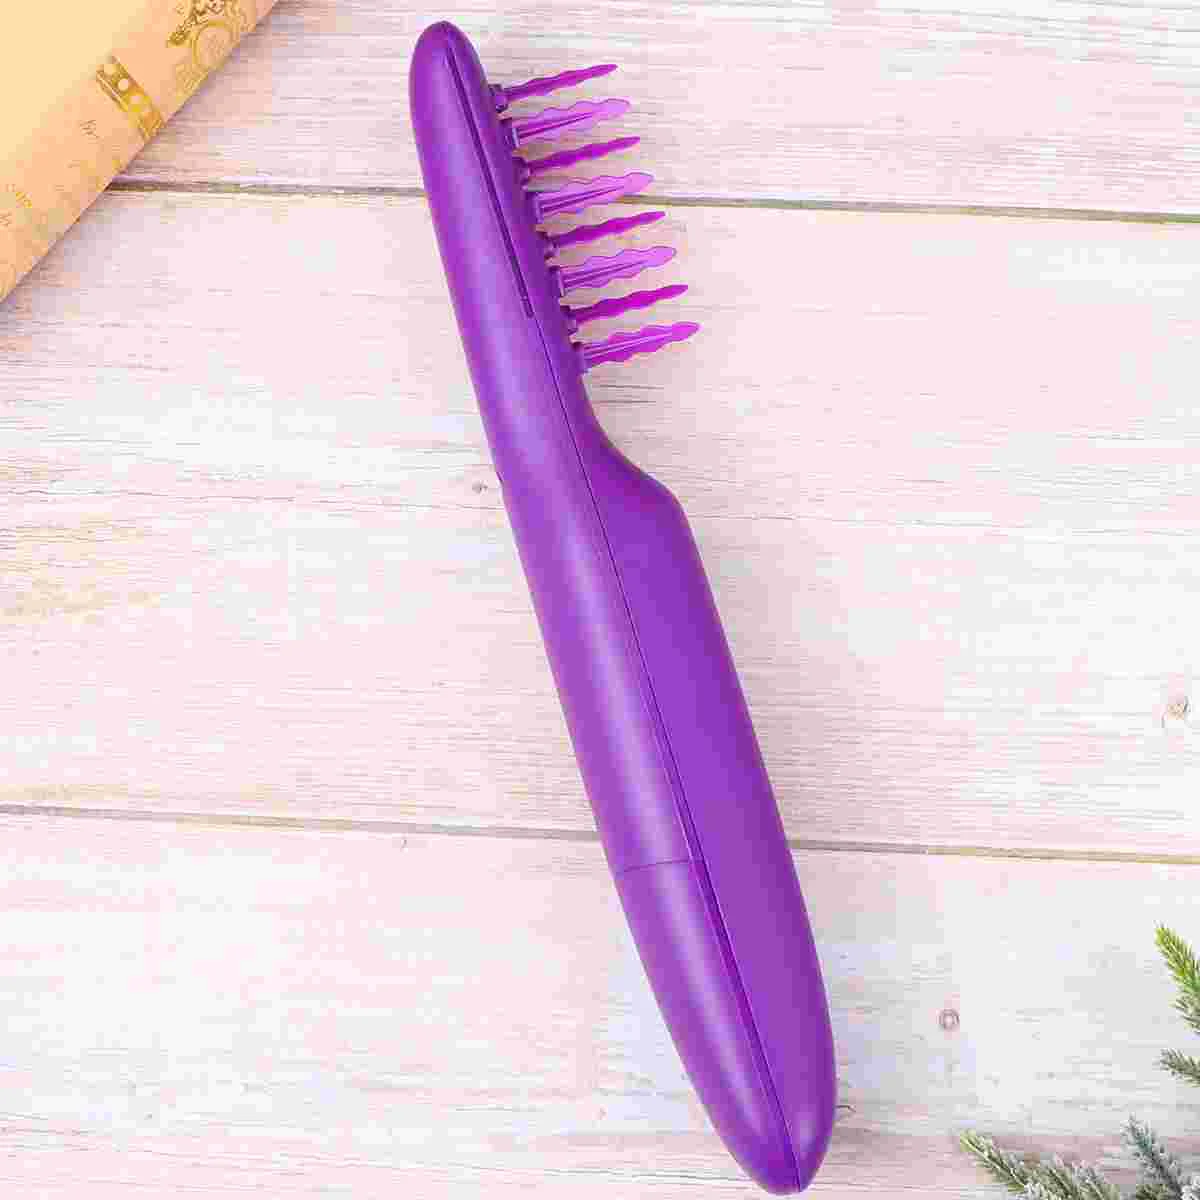 

Comb Electric Hair Brush Detangler Beard Dry Knot Anti Waves Curly Tame Or Wet Straightener Scalp Detangling Styling Pet